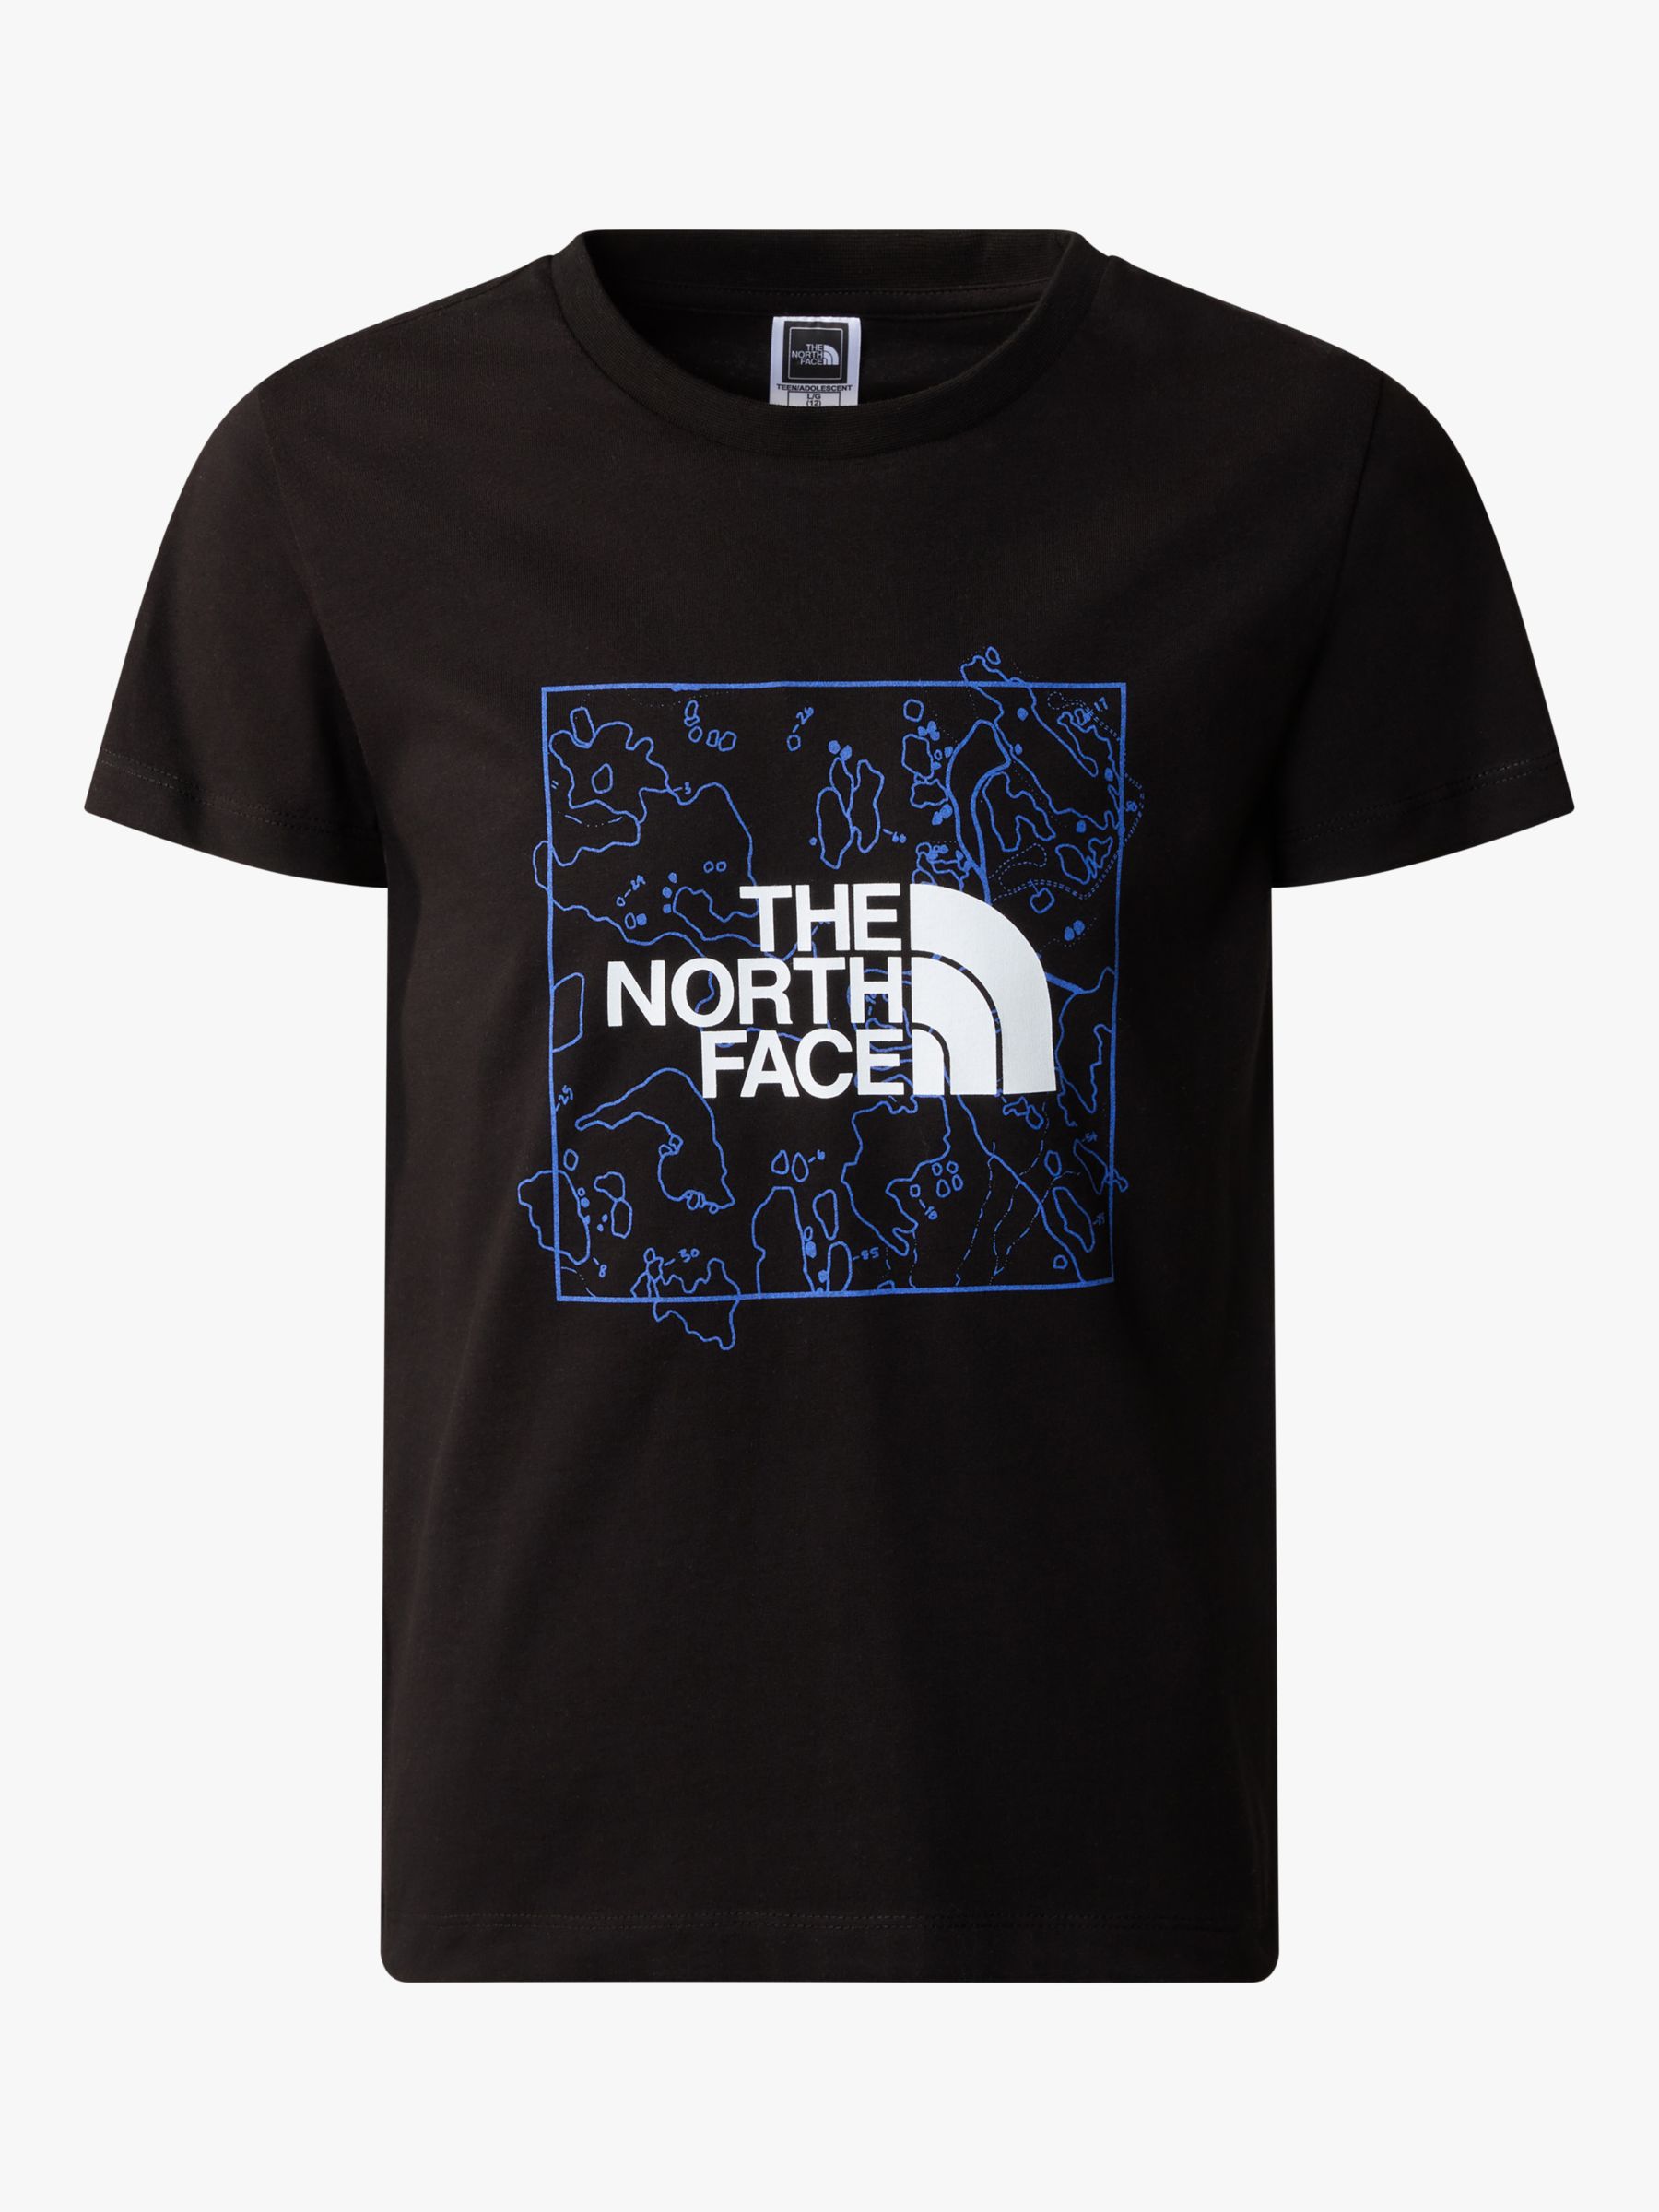 The North Face Kids' New Logo Short Sleeve T-Shirt, Black, M